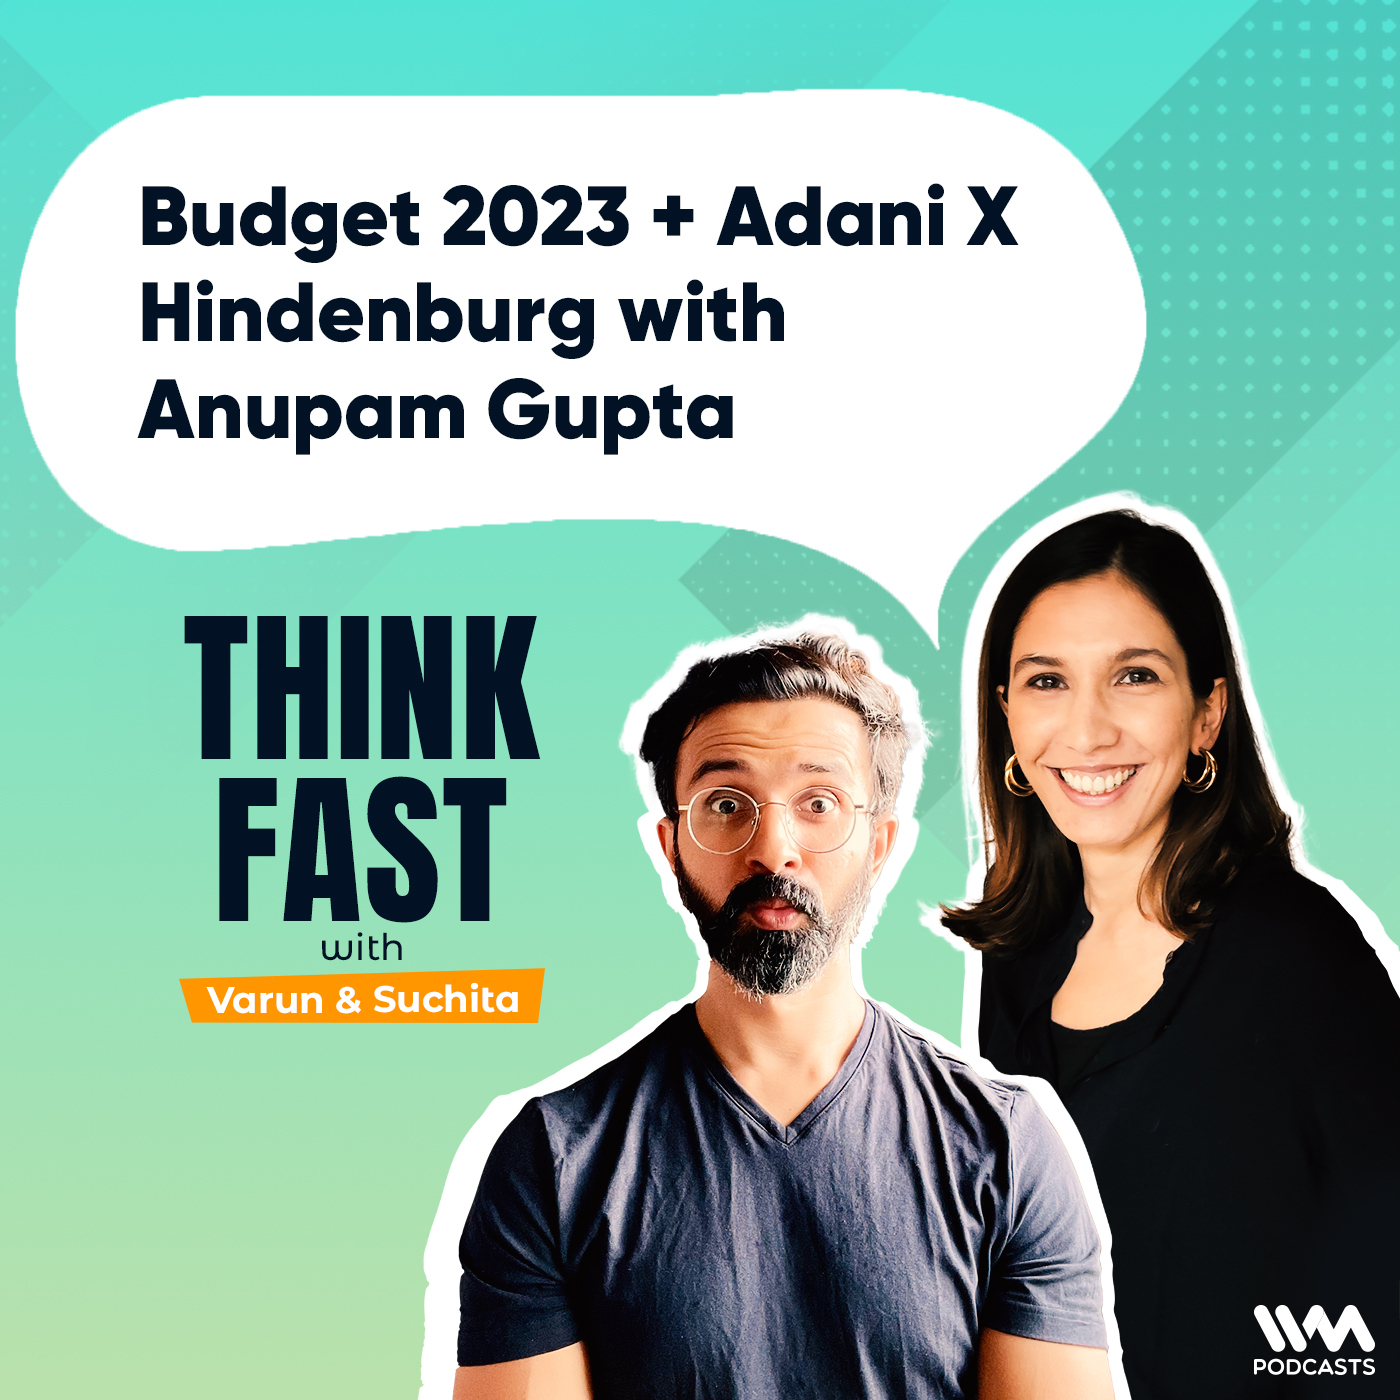 Budget 2023 + Adani X Hindenburg with Anupam Gupta